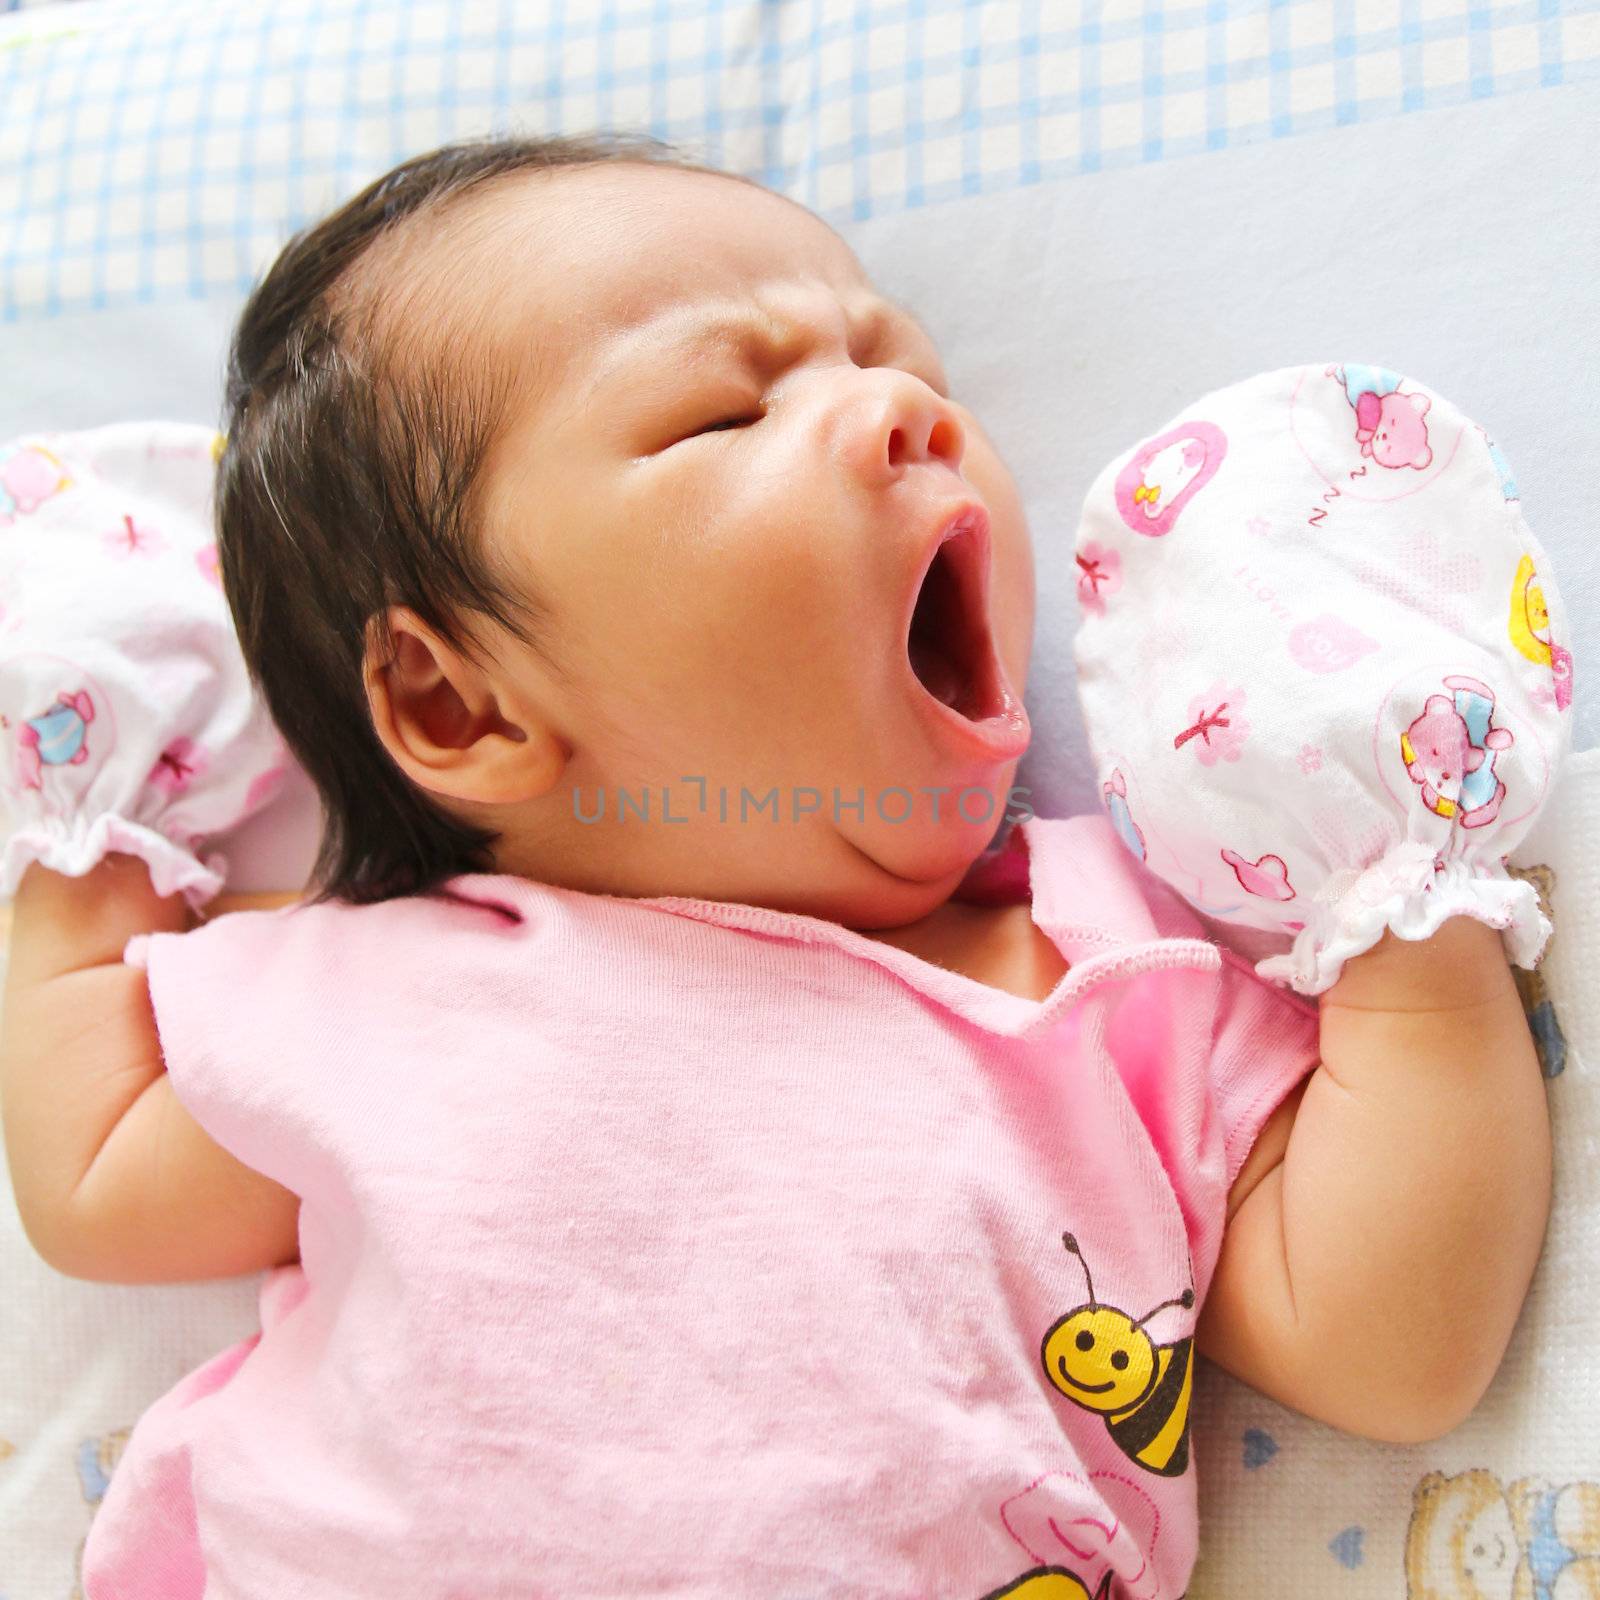 Newborn Asian baby girl lies on a blanket by doraclub